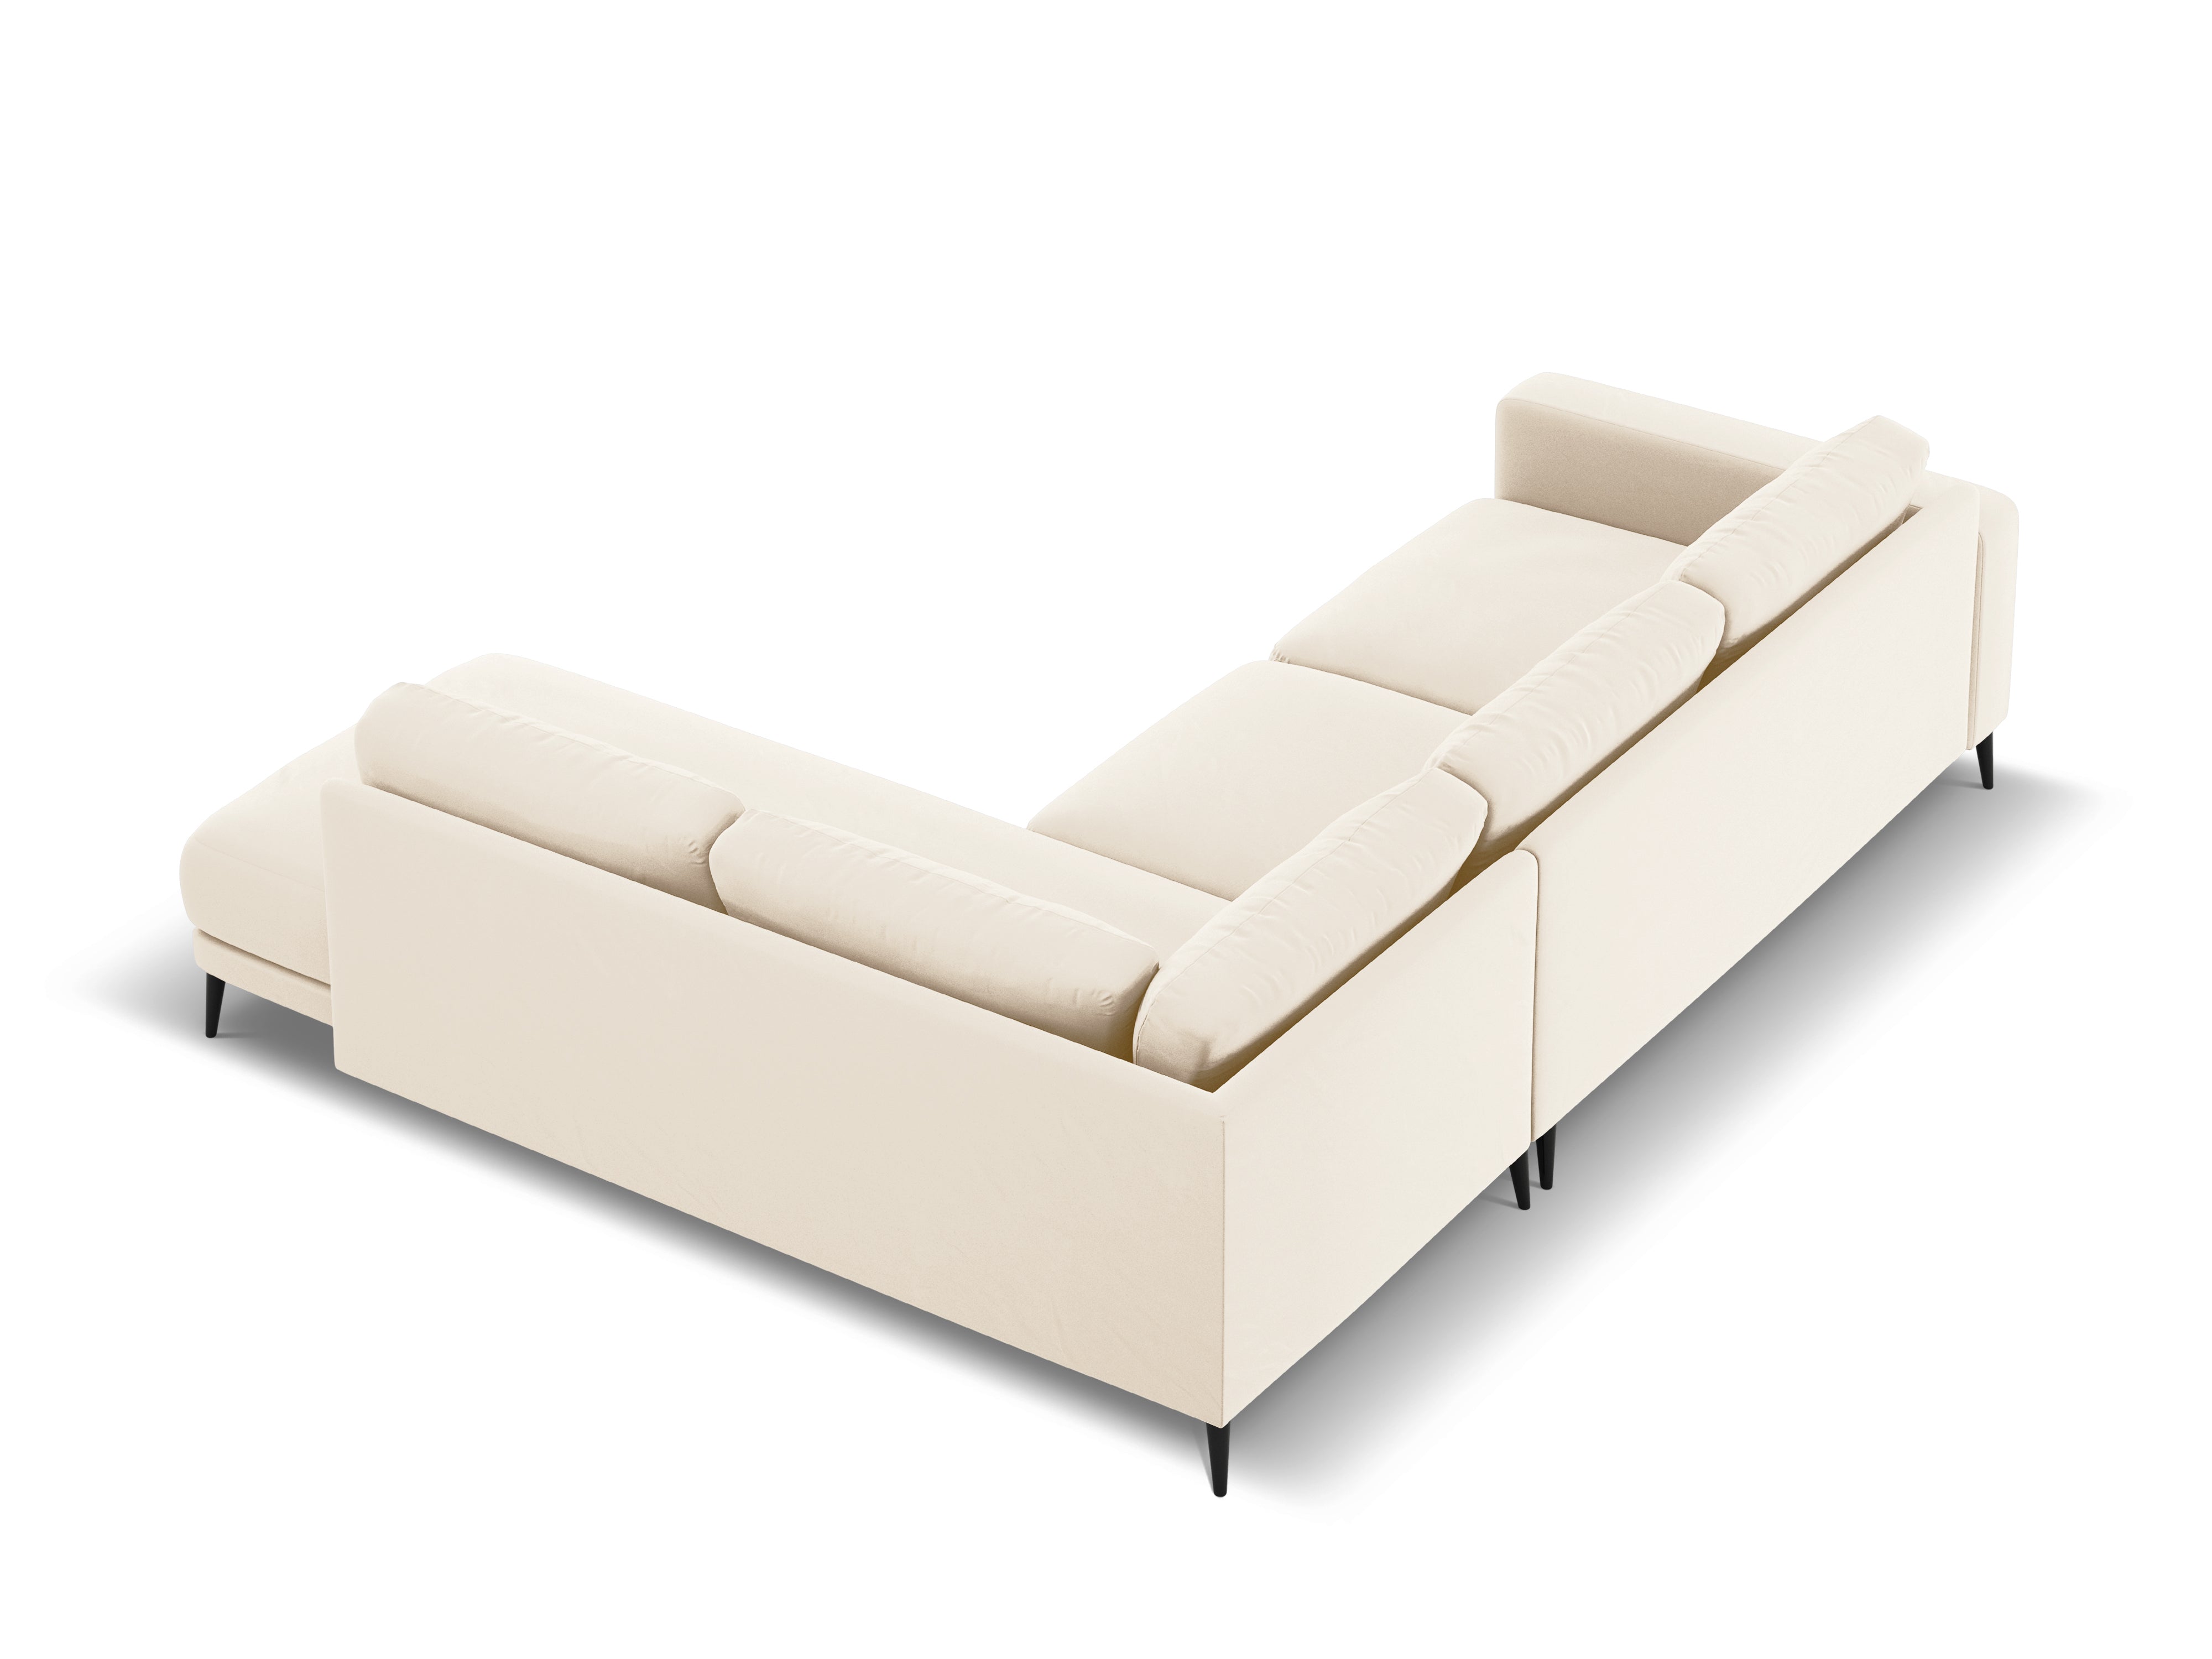 Velvet Right Corner Sofa, "Kylie", 4 Seats, 251x185x80
Made in Europe, Micadoni, Eye on Design